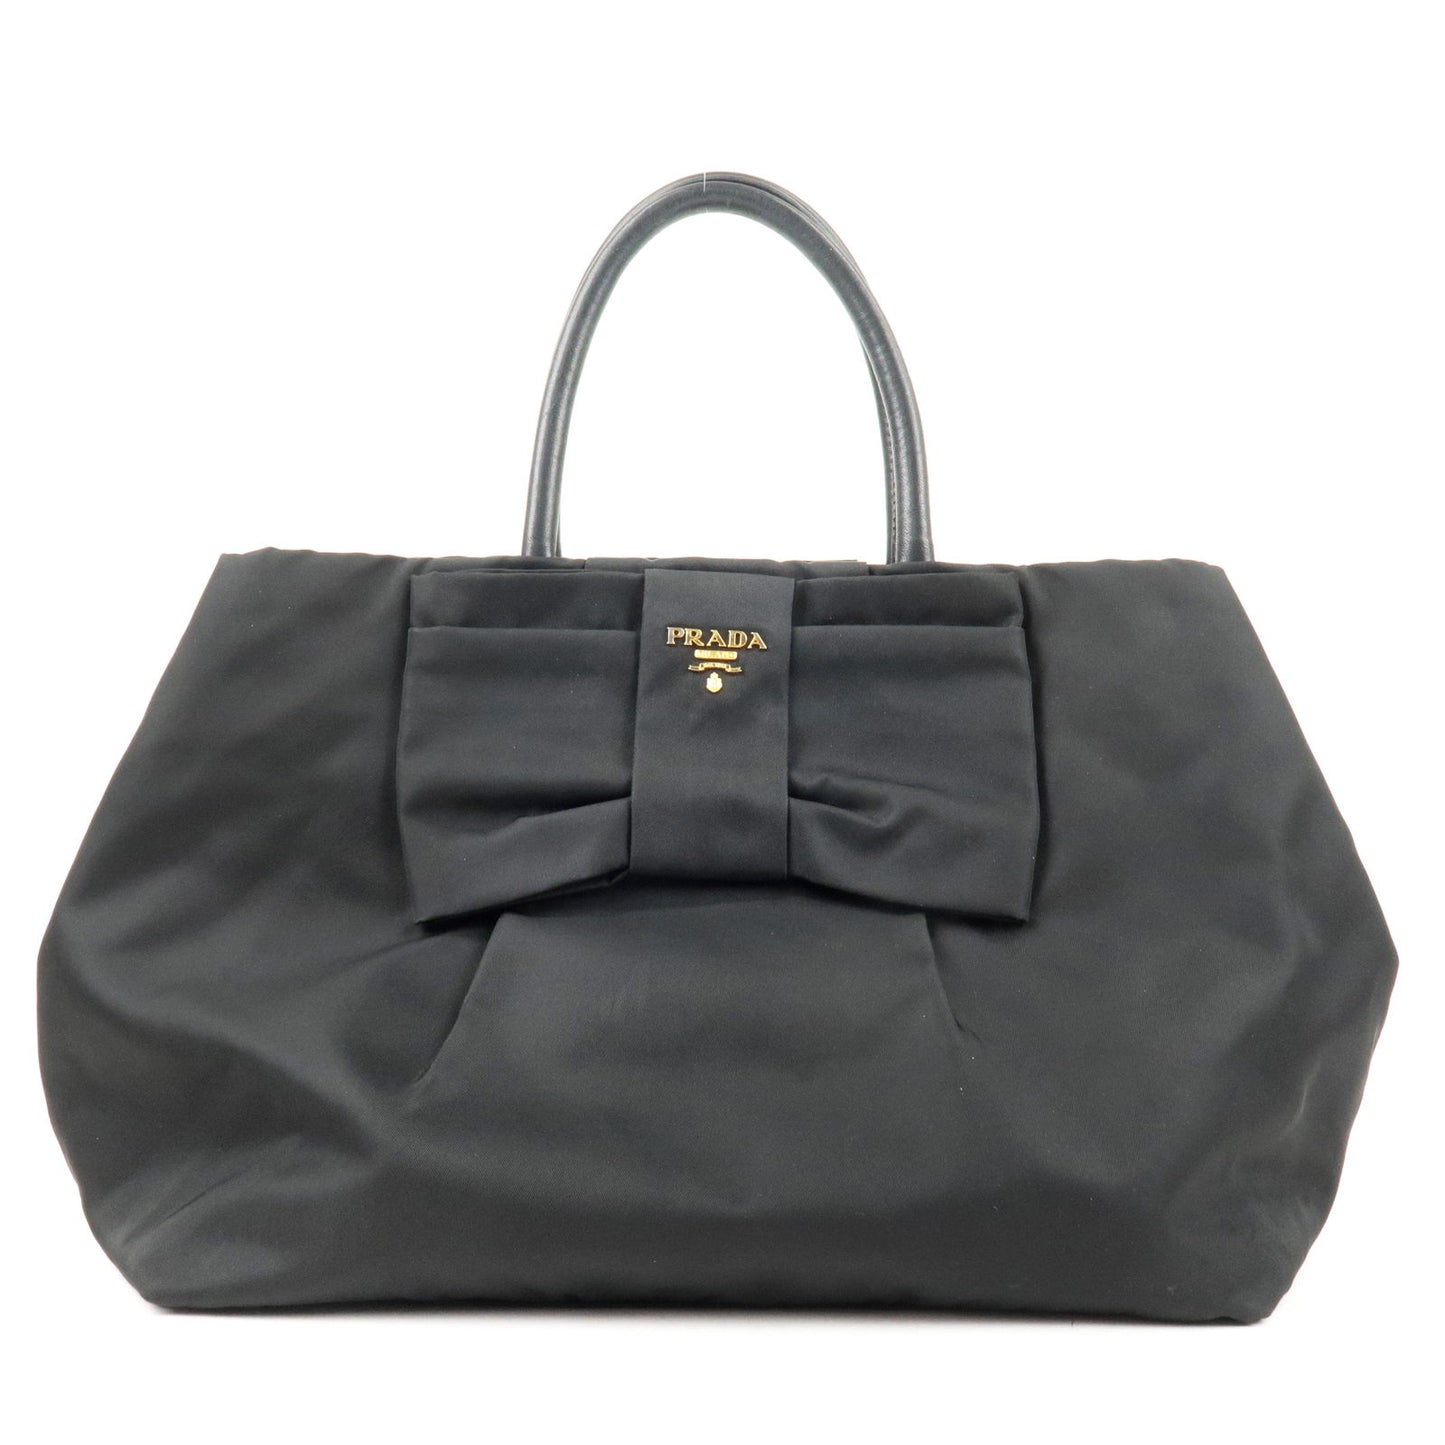 PRADA-Nylon-Leather-Ribbon-Hand-Bag-Tote-Bag-NERO-Black-BN1601